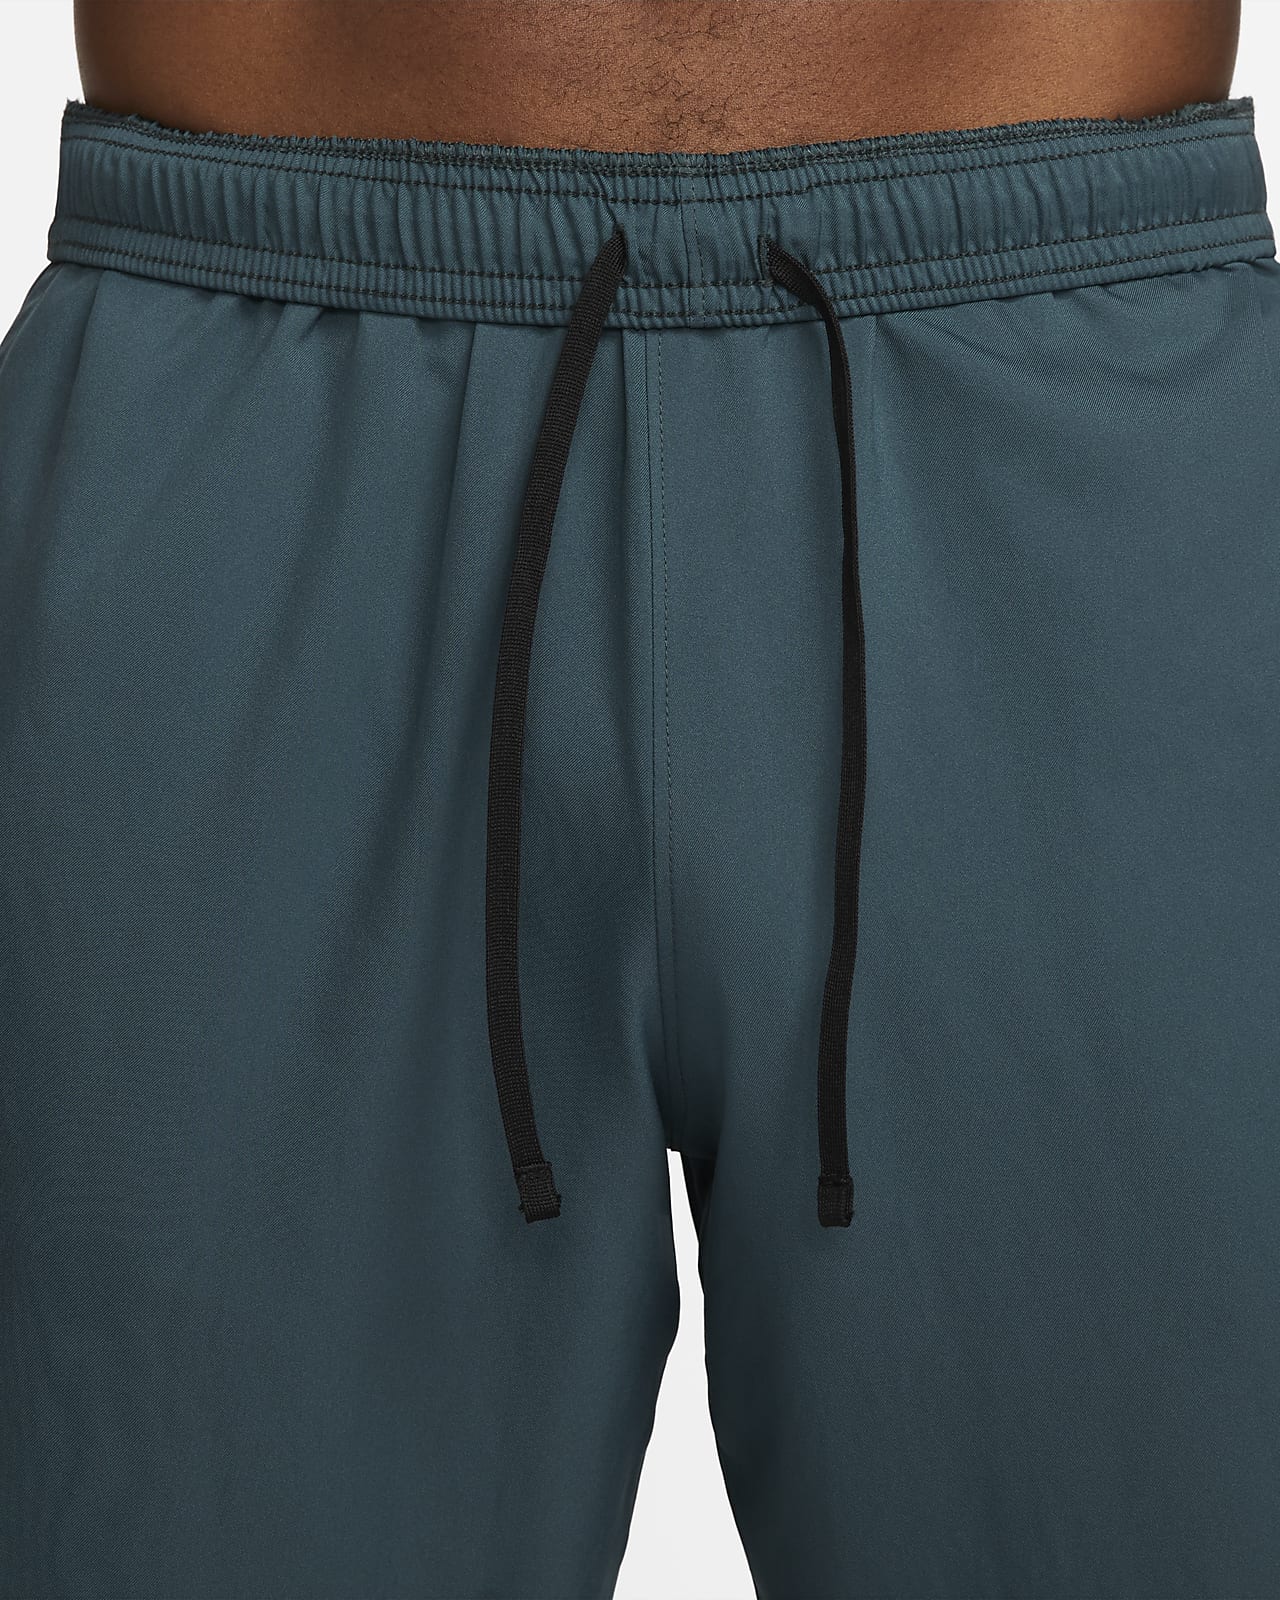 Nike Running pants DRI-FIT RUN DIVISION CHALLENGER in black/ gray